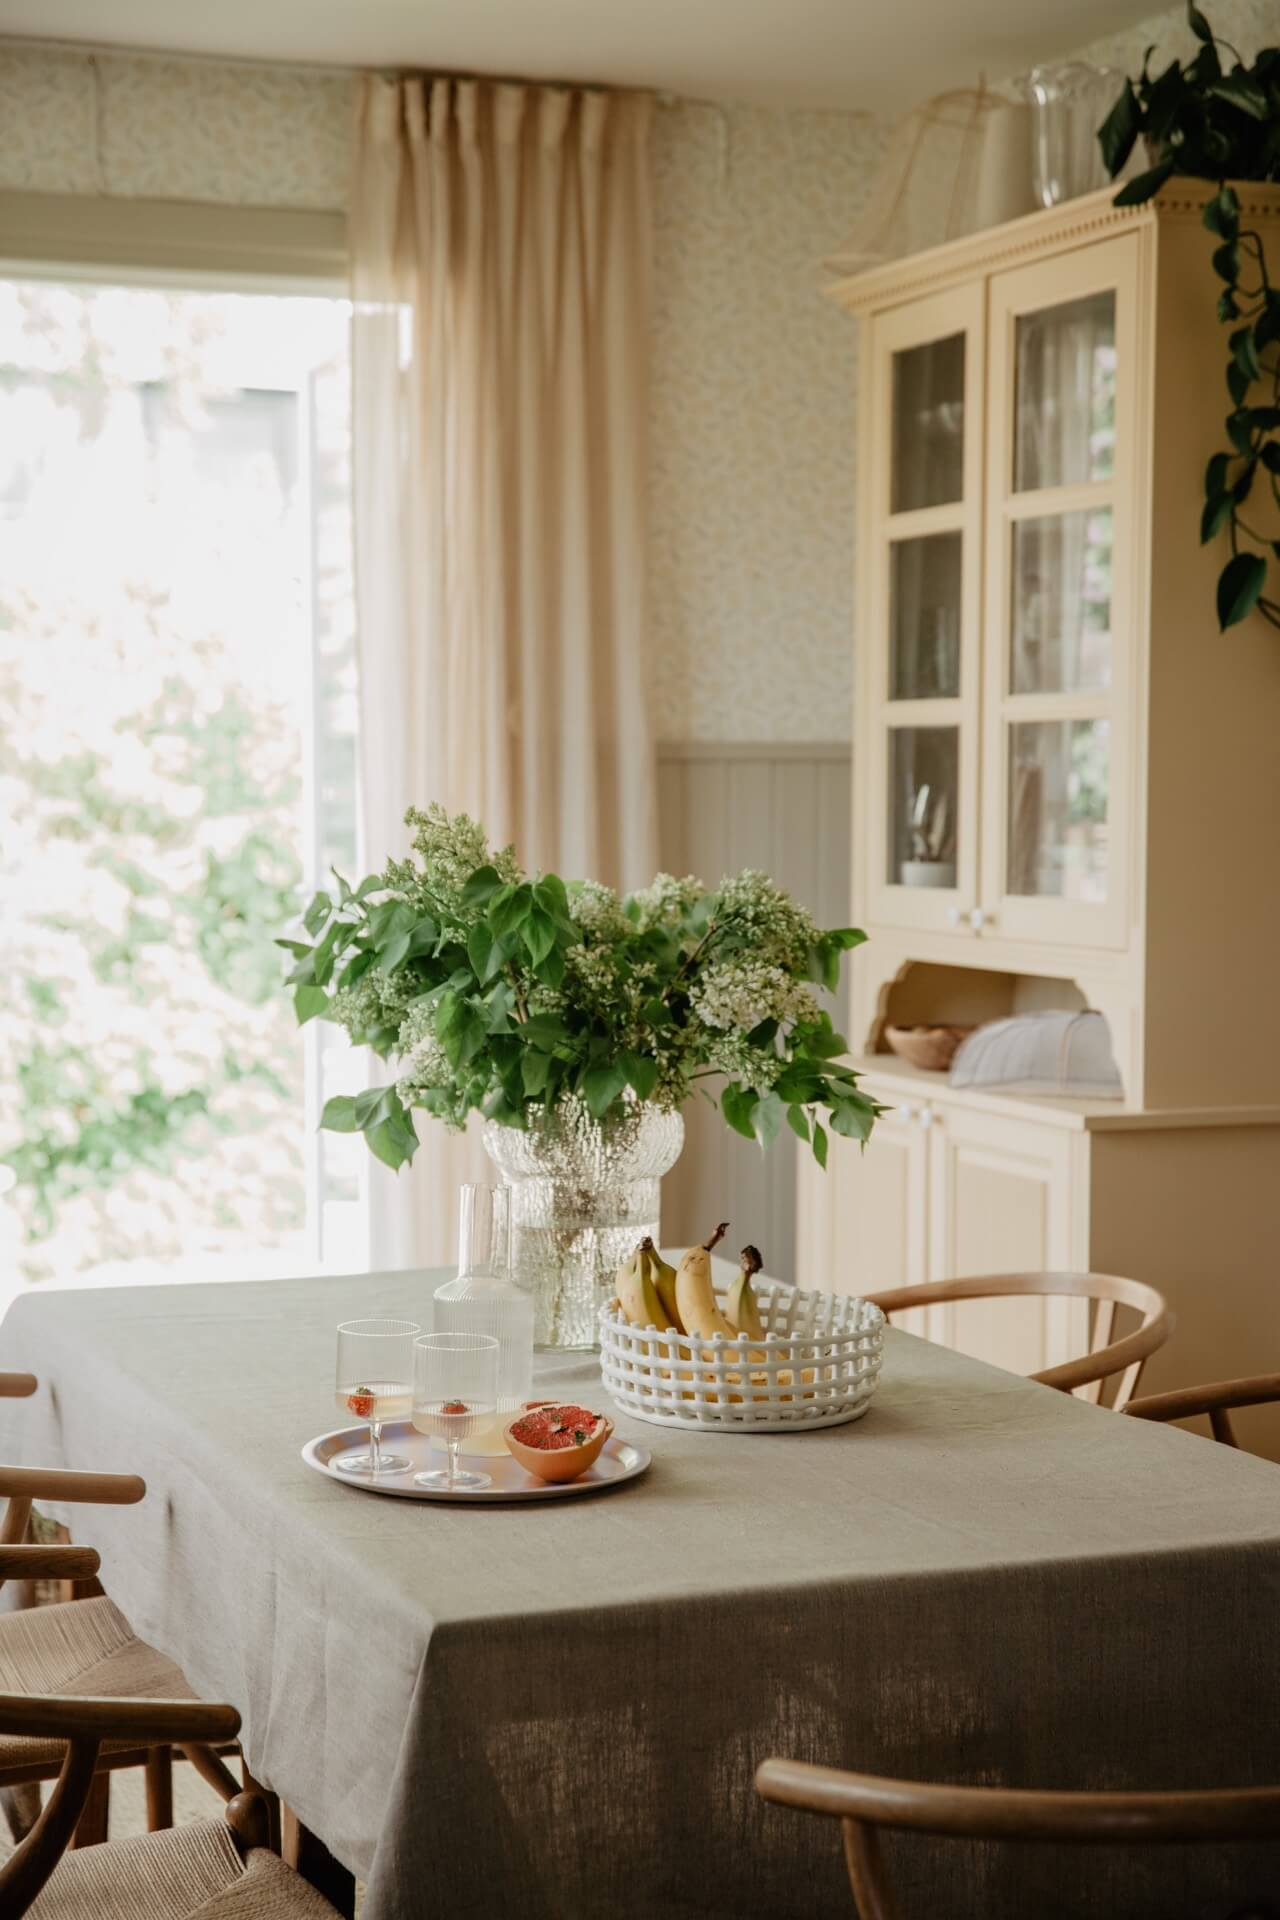 Emelie Sundberg home tour - interior of Swedish home - kitchen table